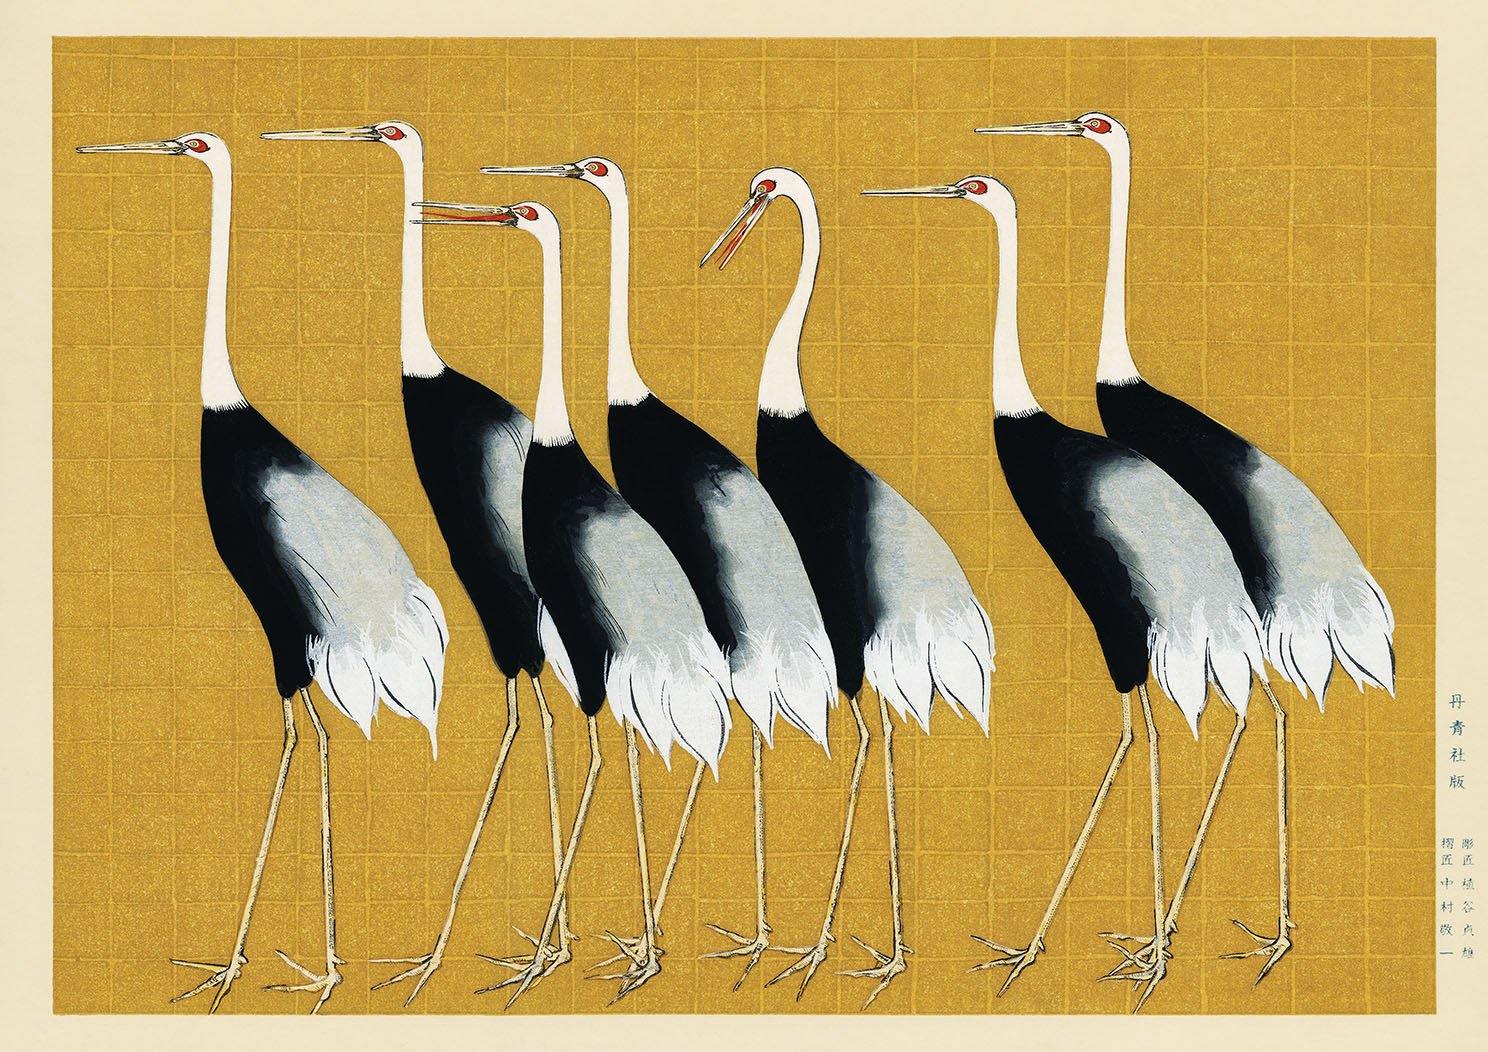 BIRDS ART PRINT: Vintage Japanese Cranes Illustration - Pimlico Prints